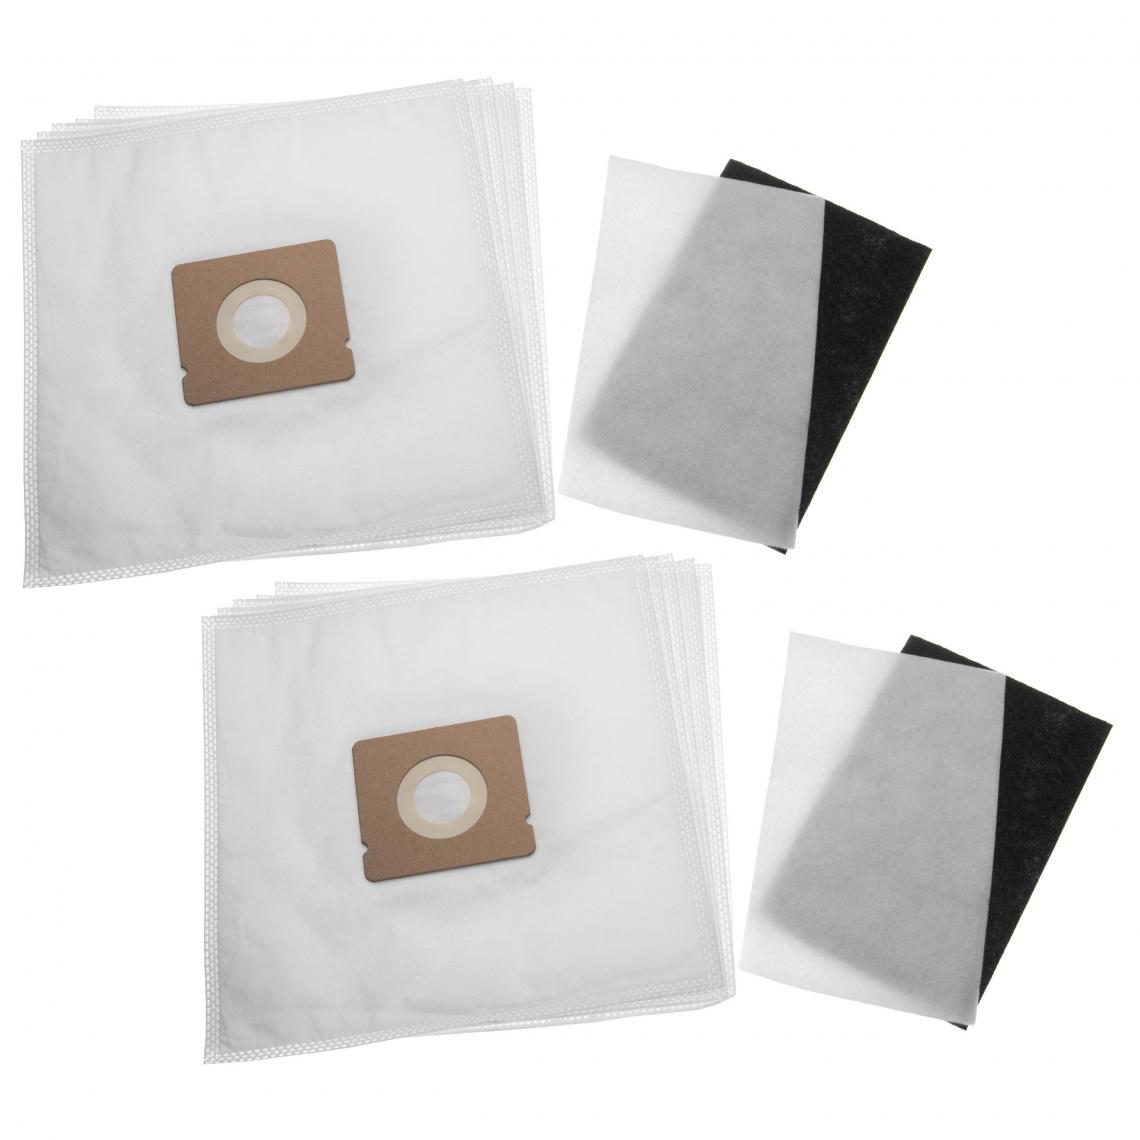 Vhbw - vhbw Lot de sacs (microfibres non tissées) + filtre avec 12 pièces compatible avec Rowenta RO5295OA, TW185188/4Q0, TW185588/4Q0 aspirateur - Accessoire entretien des sols